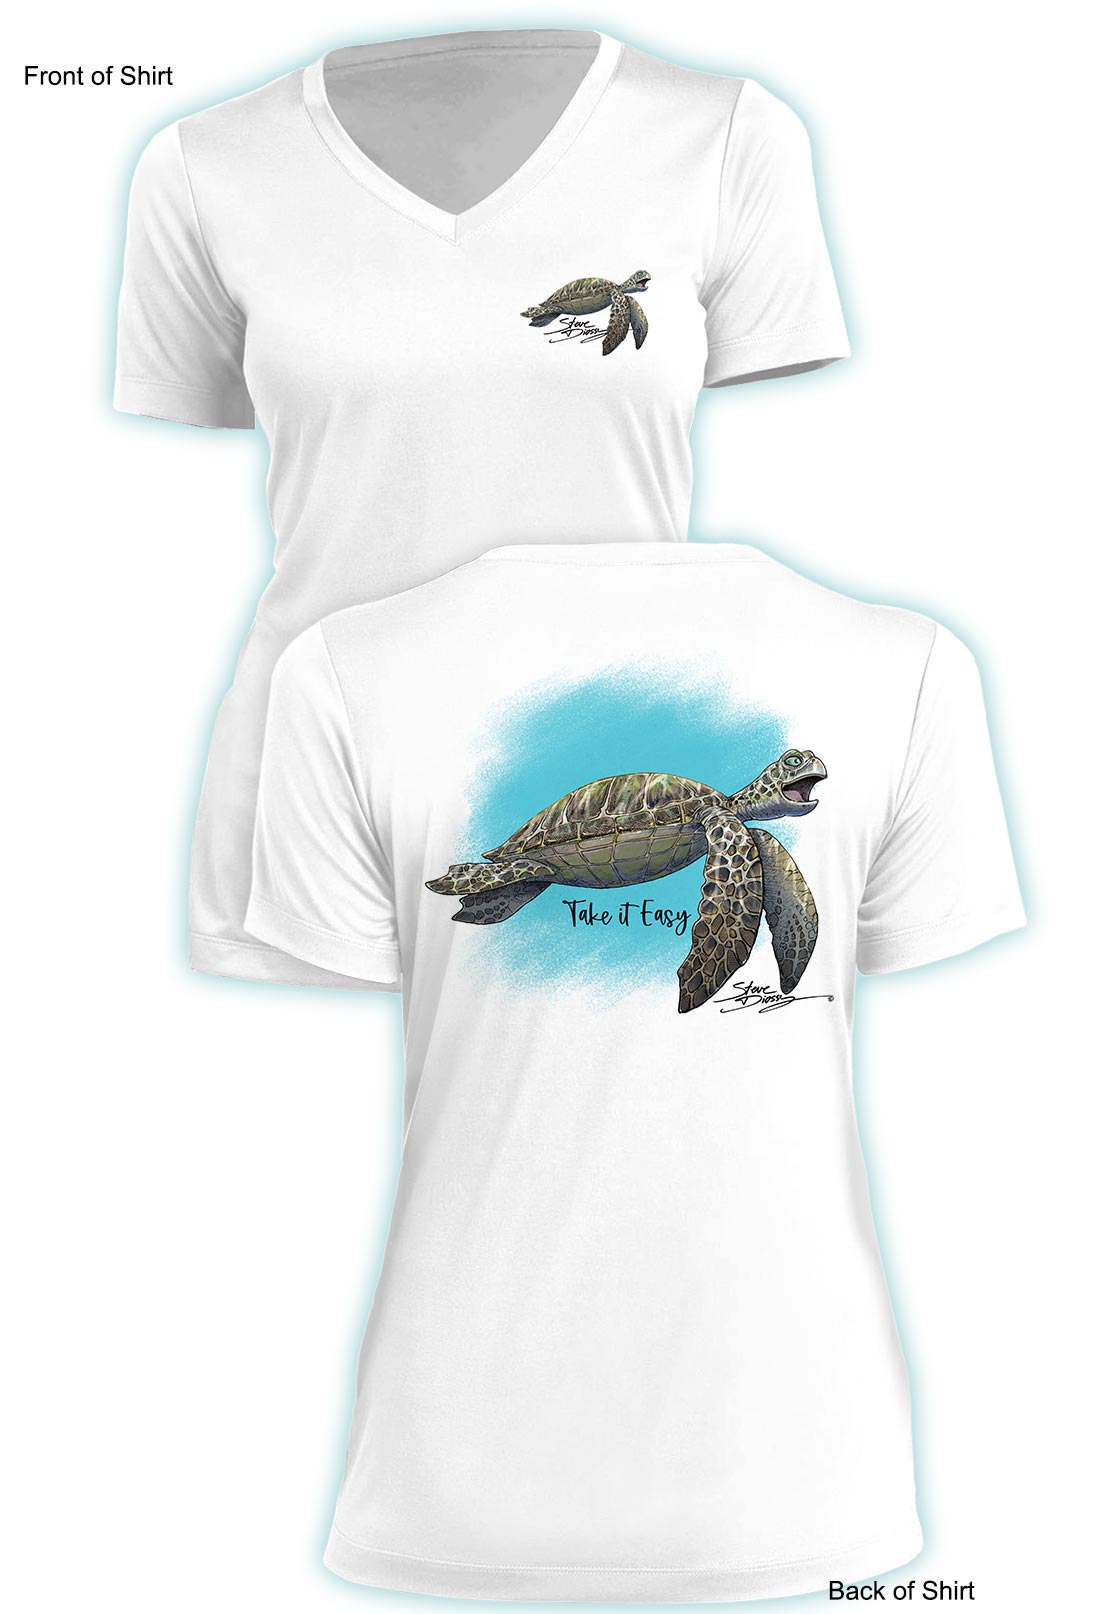 Take It Easy Turtle- Ladies Short Sleeve V-Neck-100% Polyester